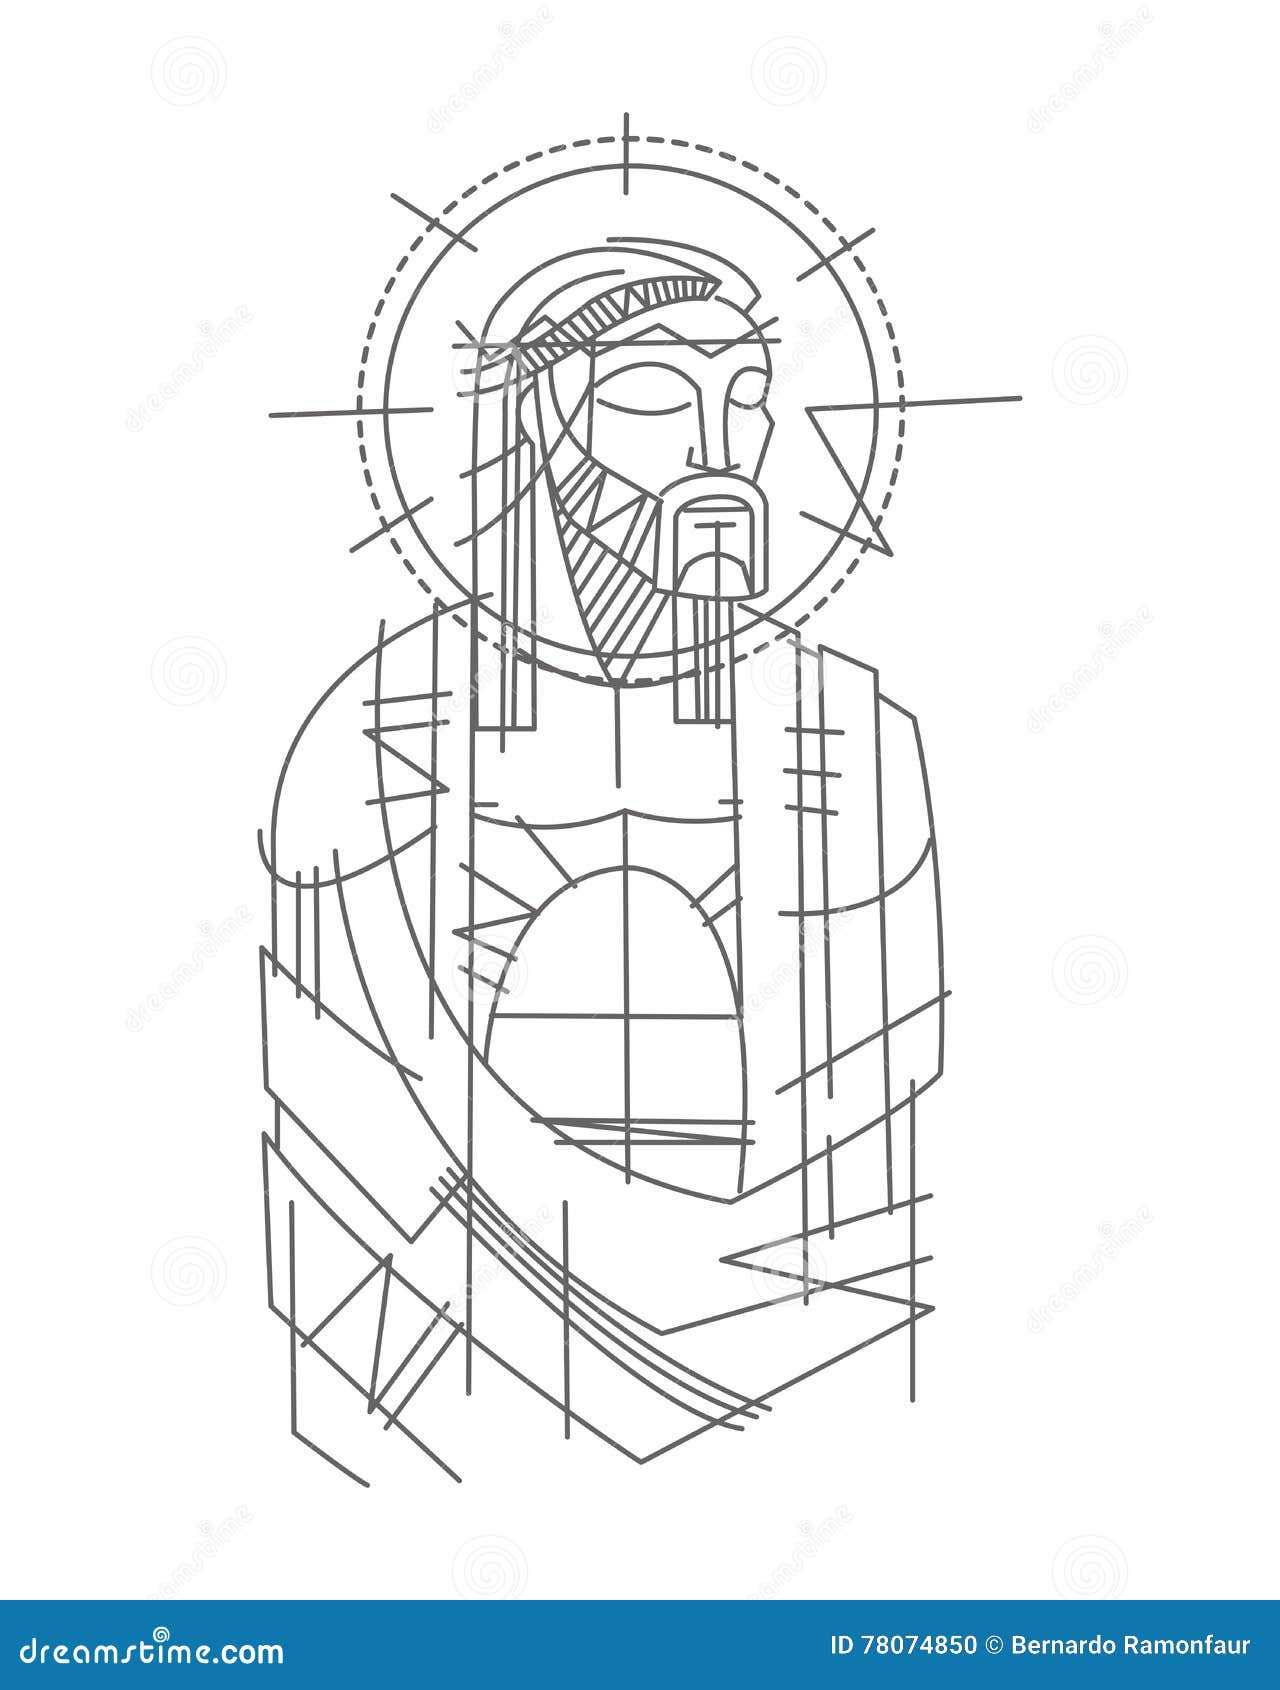 Jesus Christ pirisioner stock vector. Illustration of prisioner - 78074850